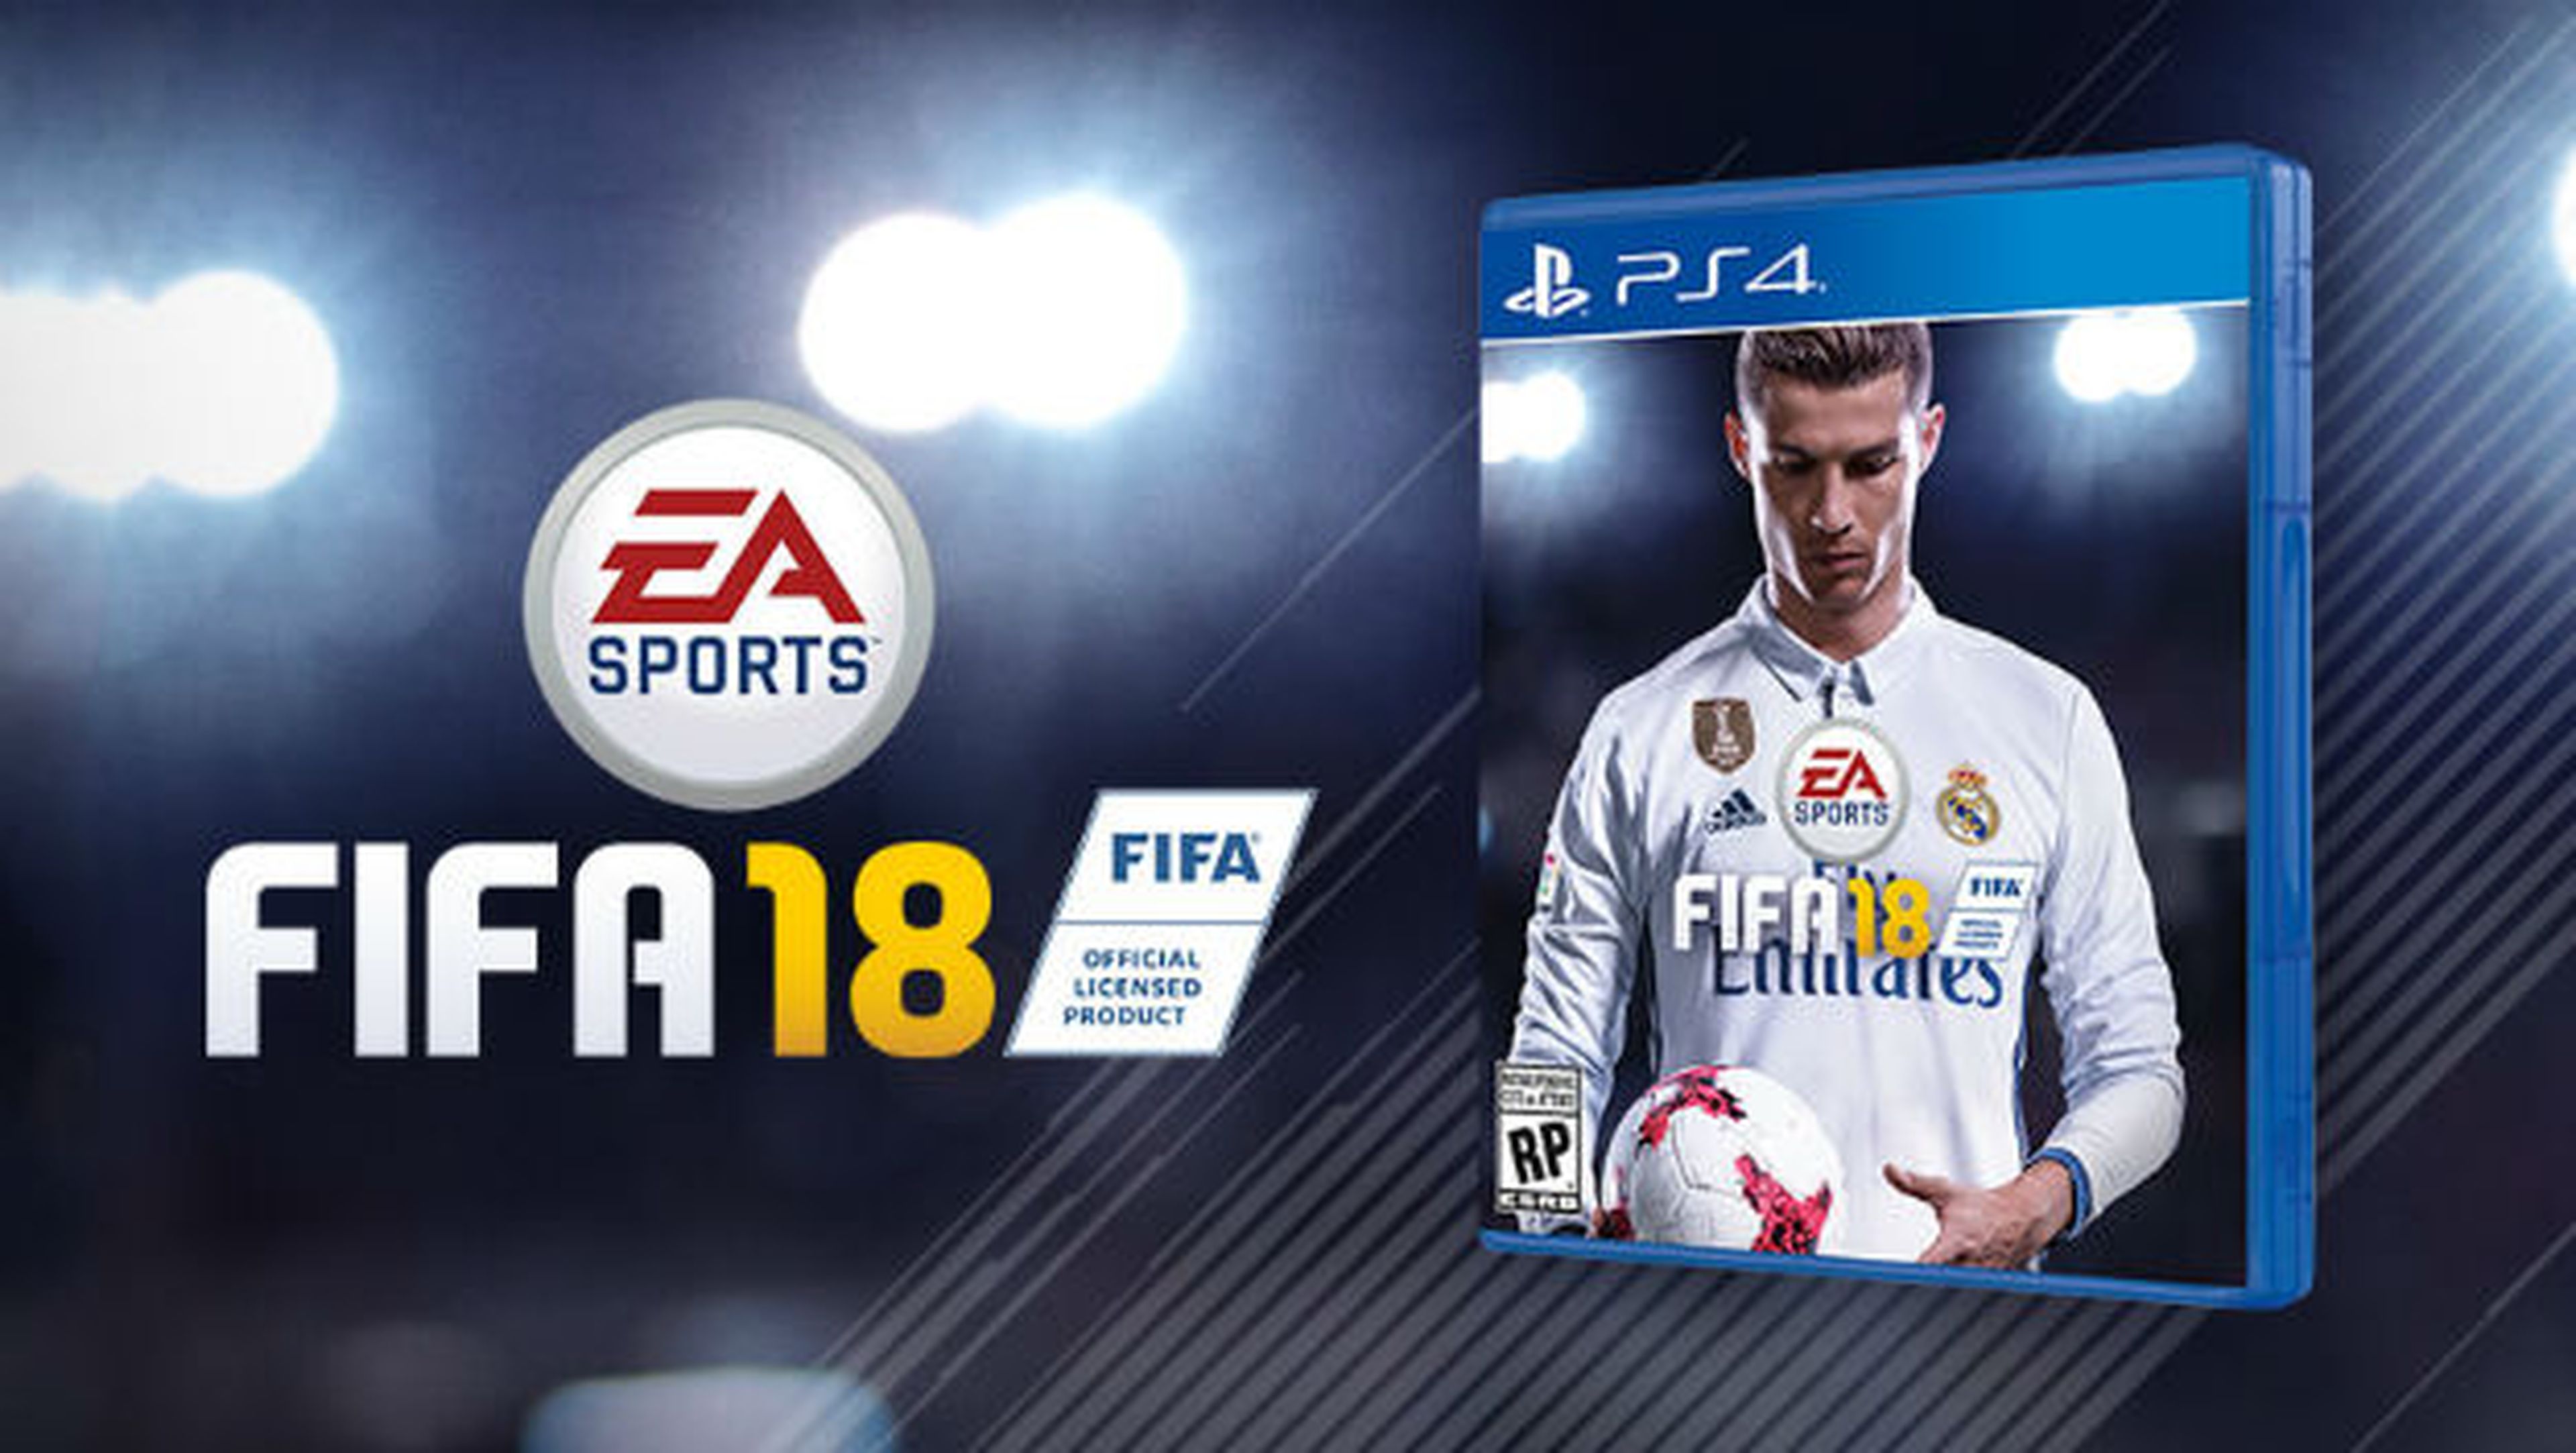 Oferta para comprar PS4 con FIFA 18 de regalo.